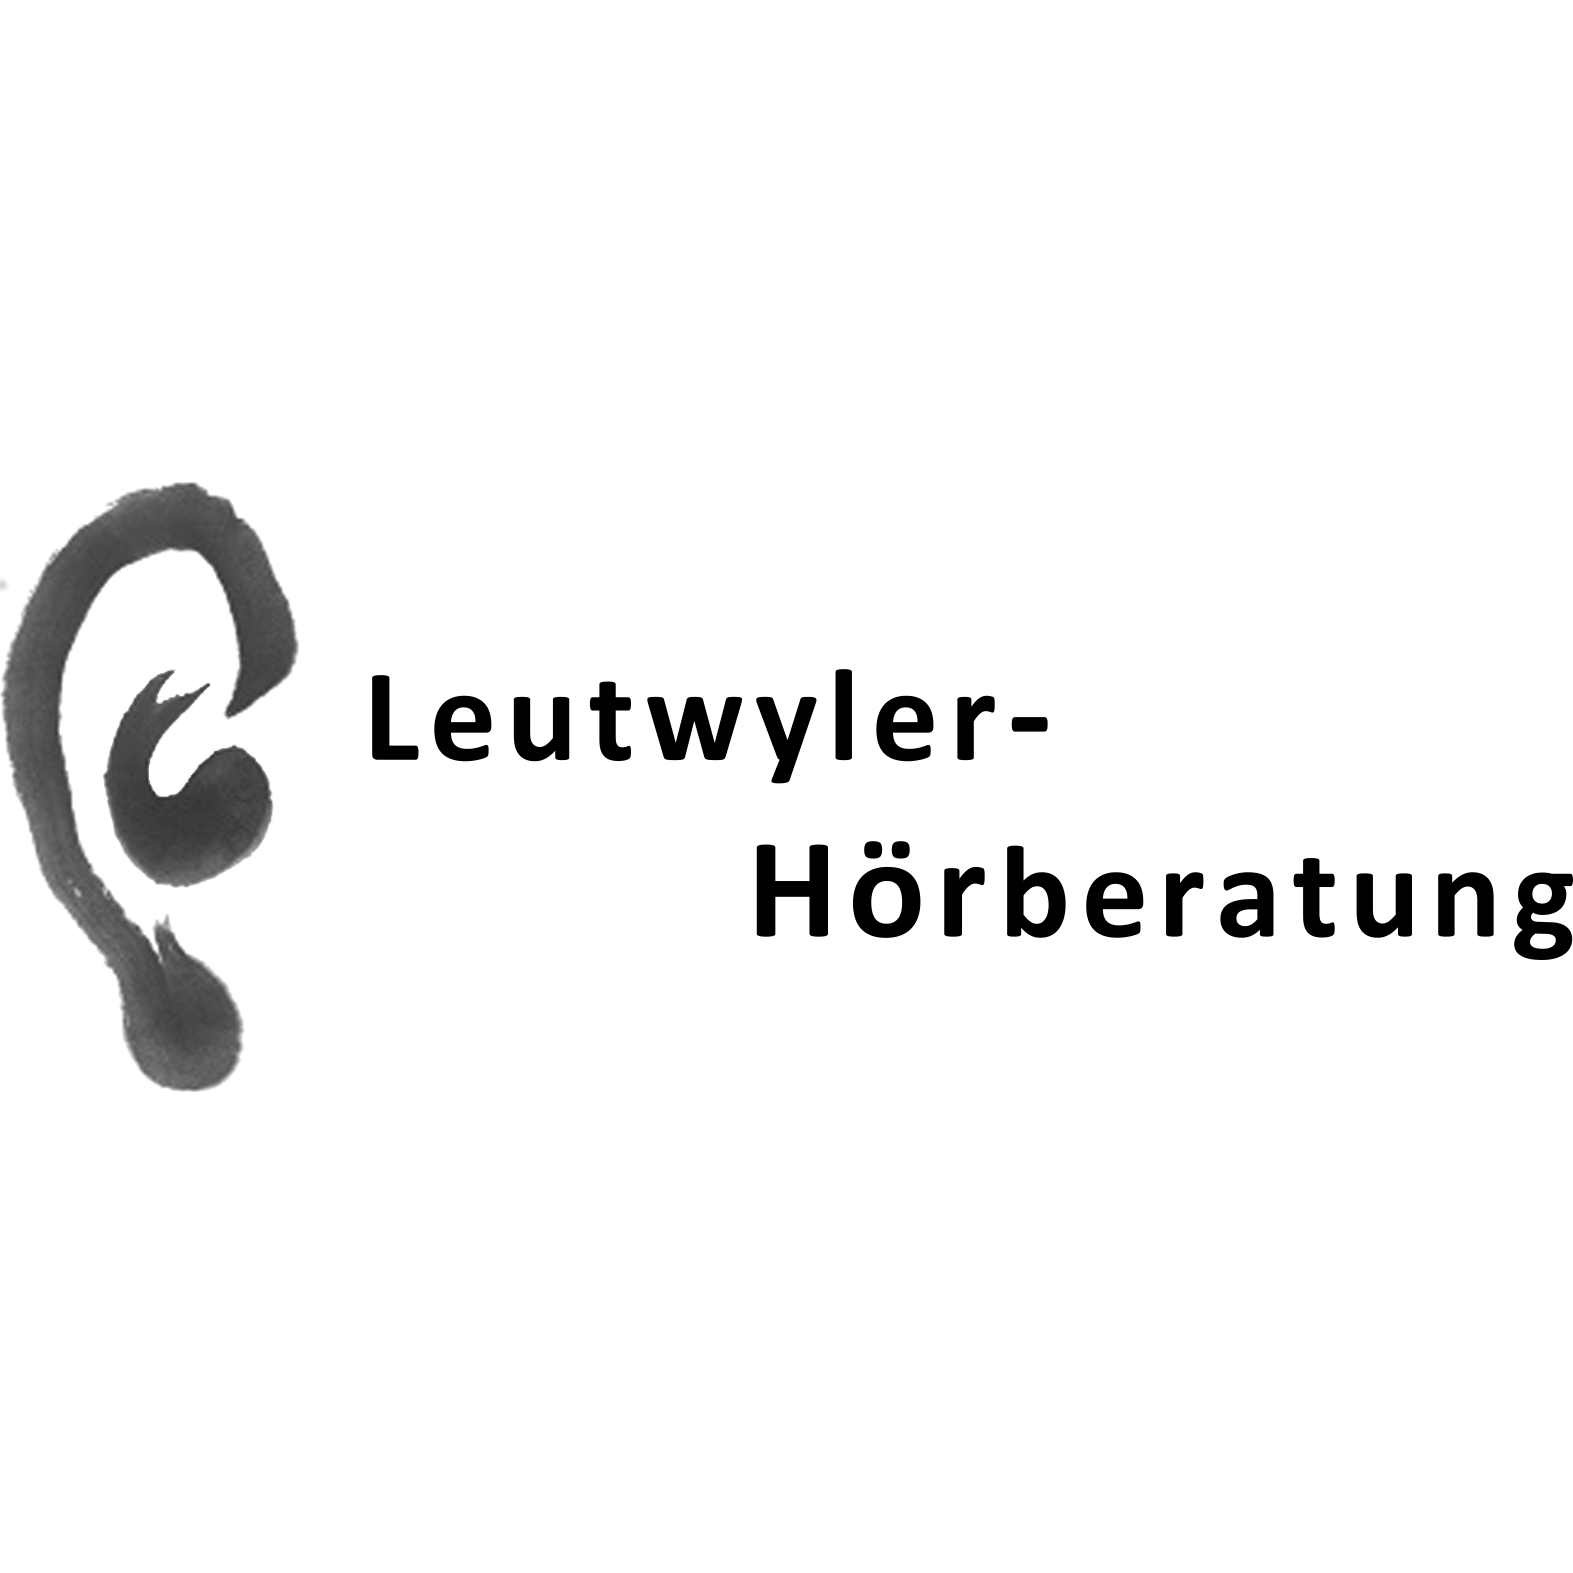 Leutwyler-Hörberatung Logo